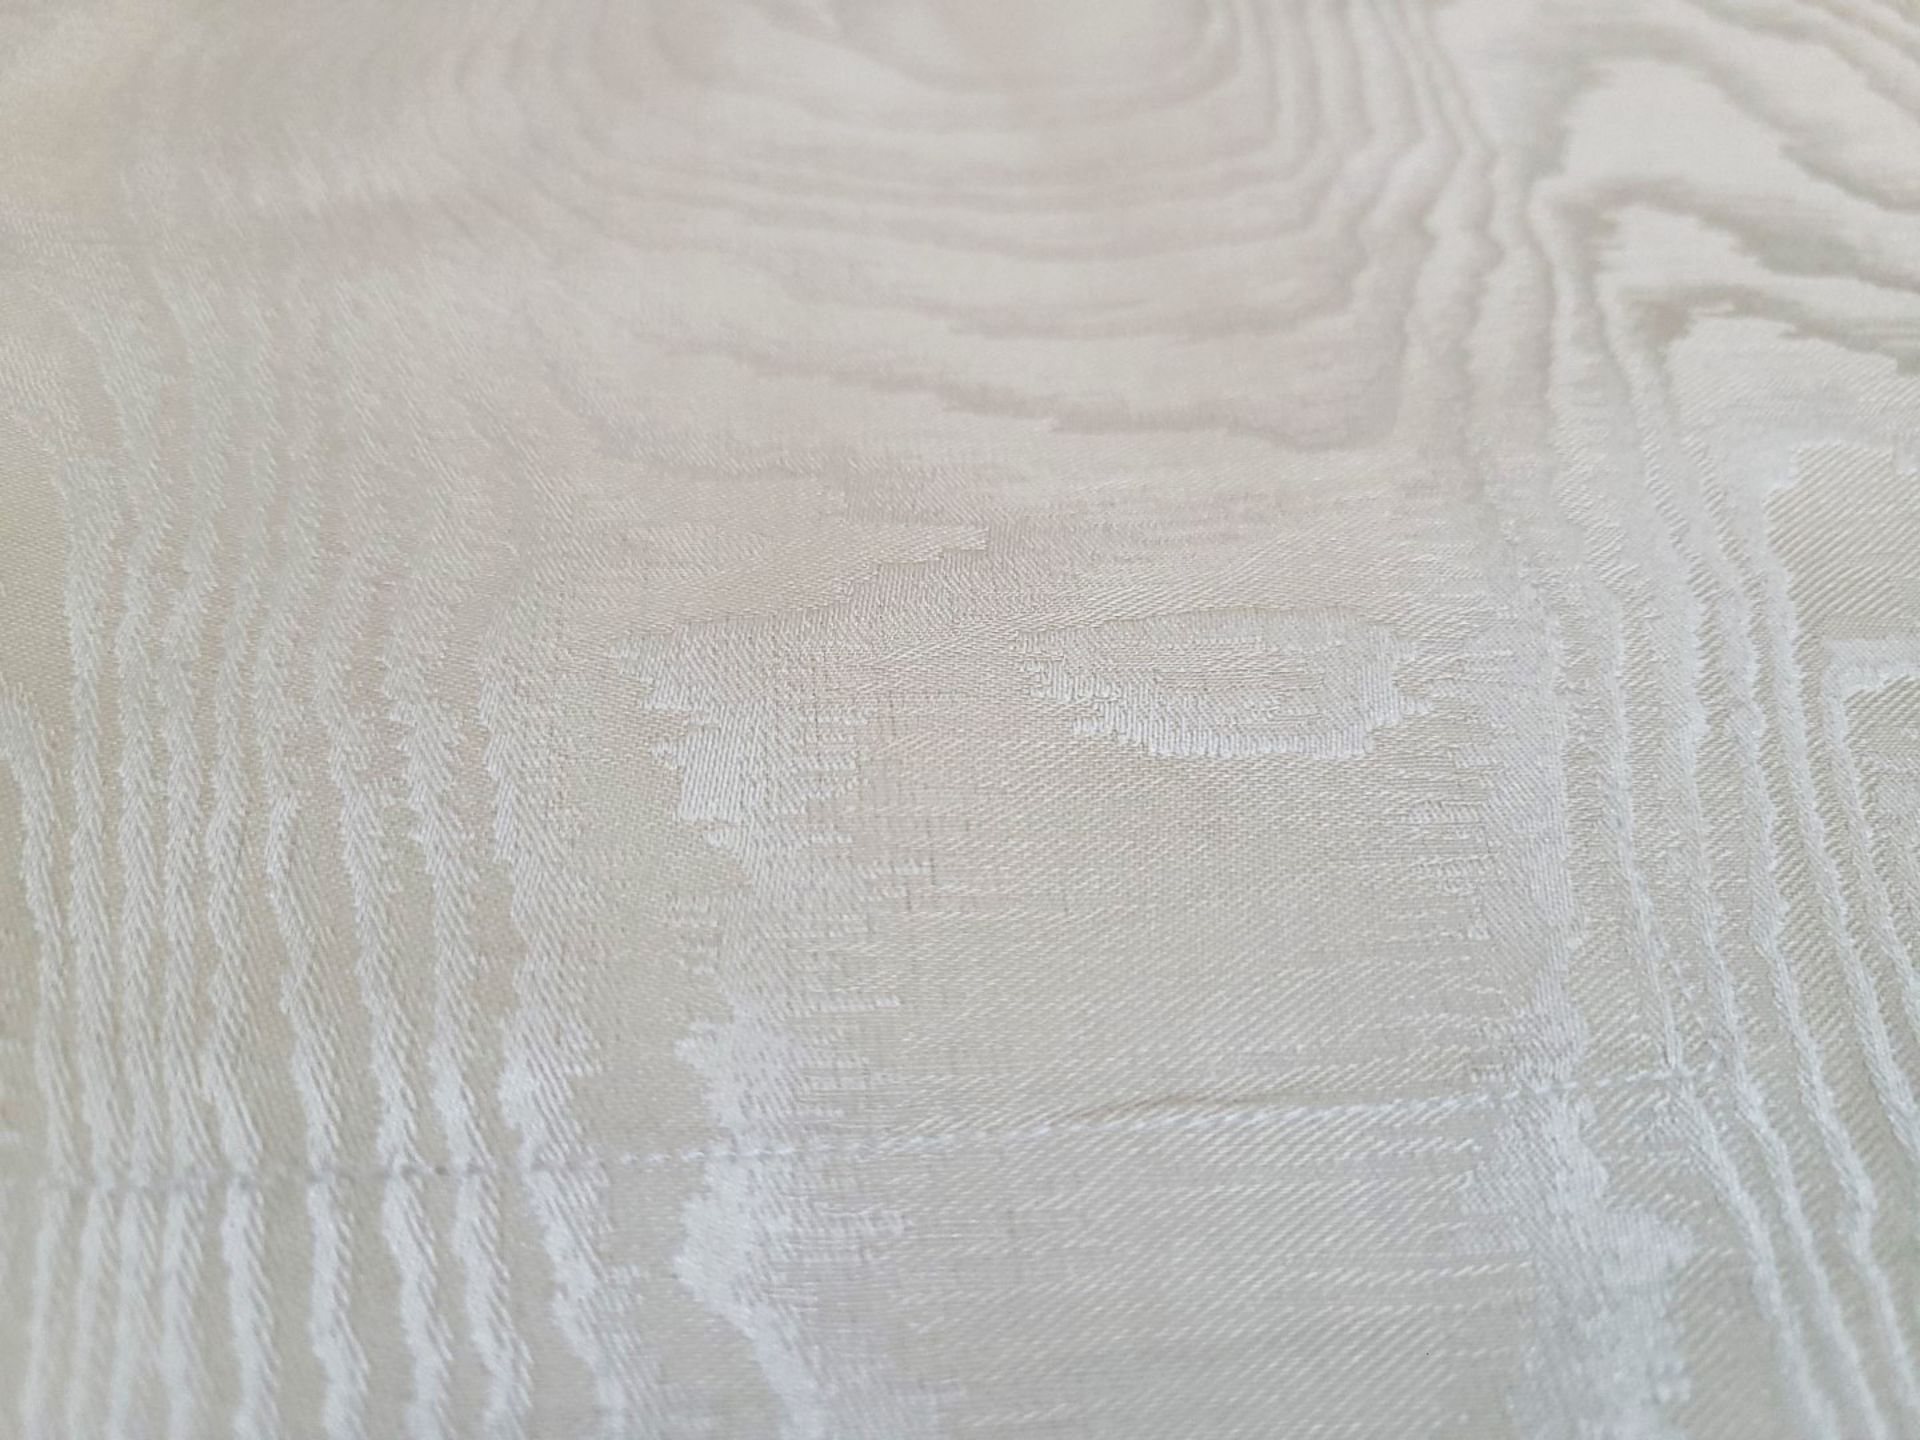 1 x PRATESI ORU Neo Moire Jacquard Beige Pillow Sham 50x70cm - Image 4 of 4